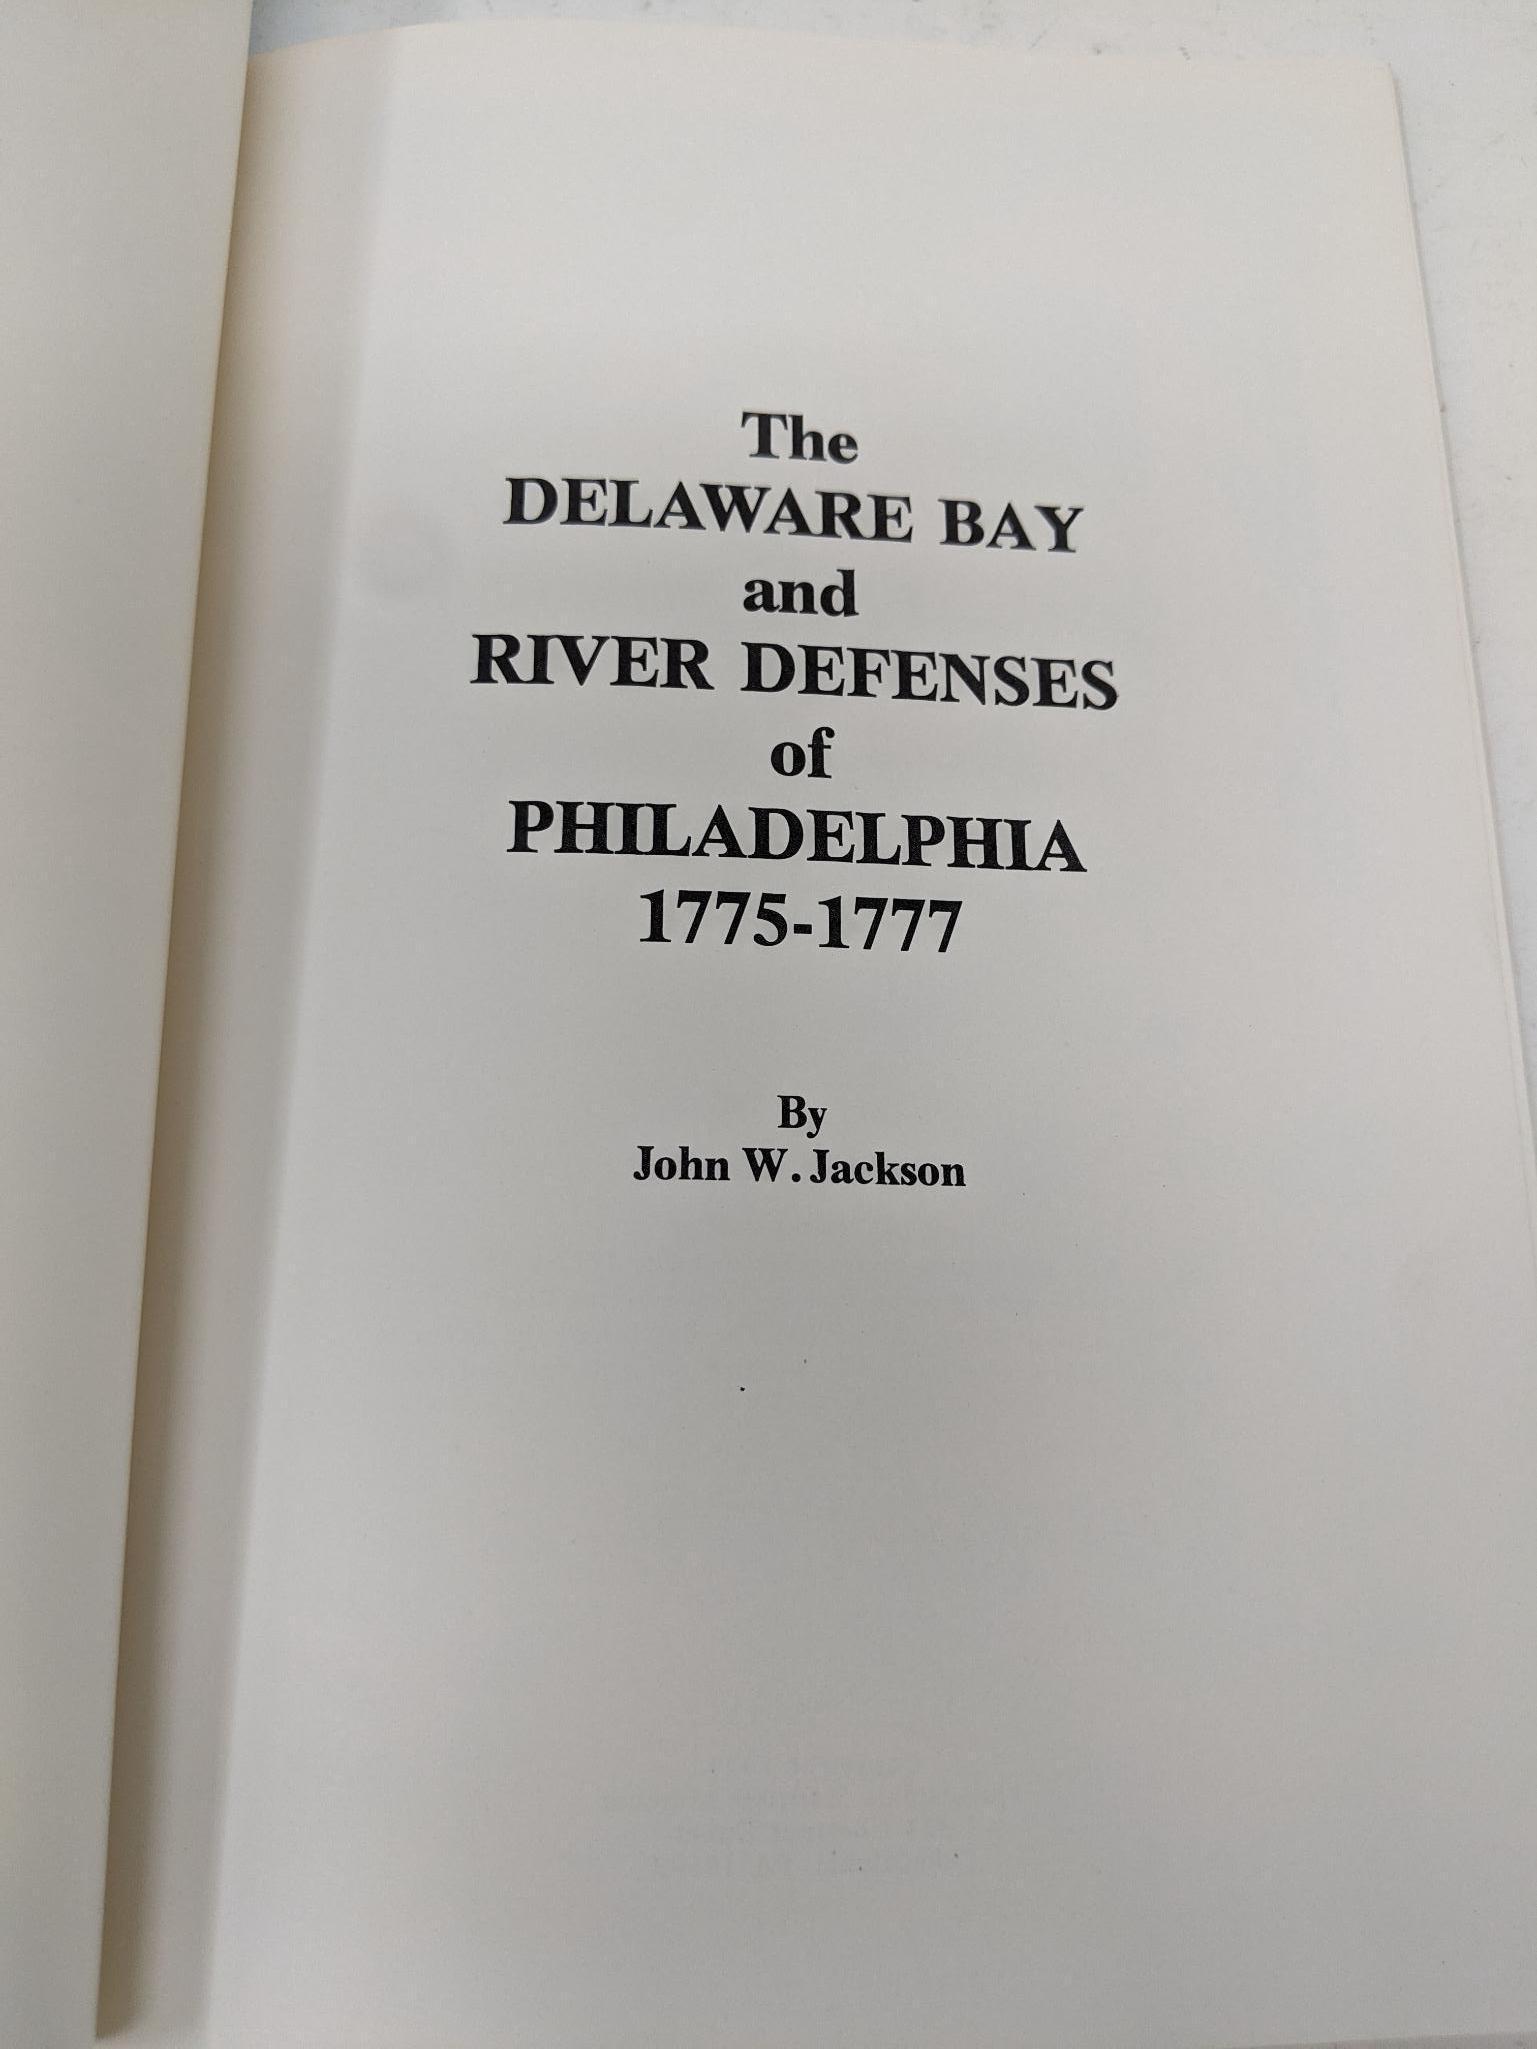 Philadelphia and Military Themed Books